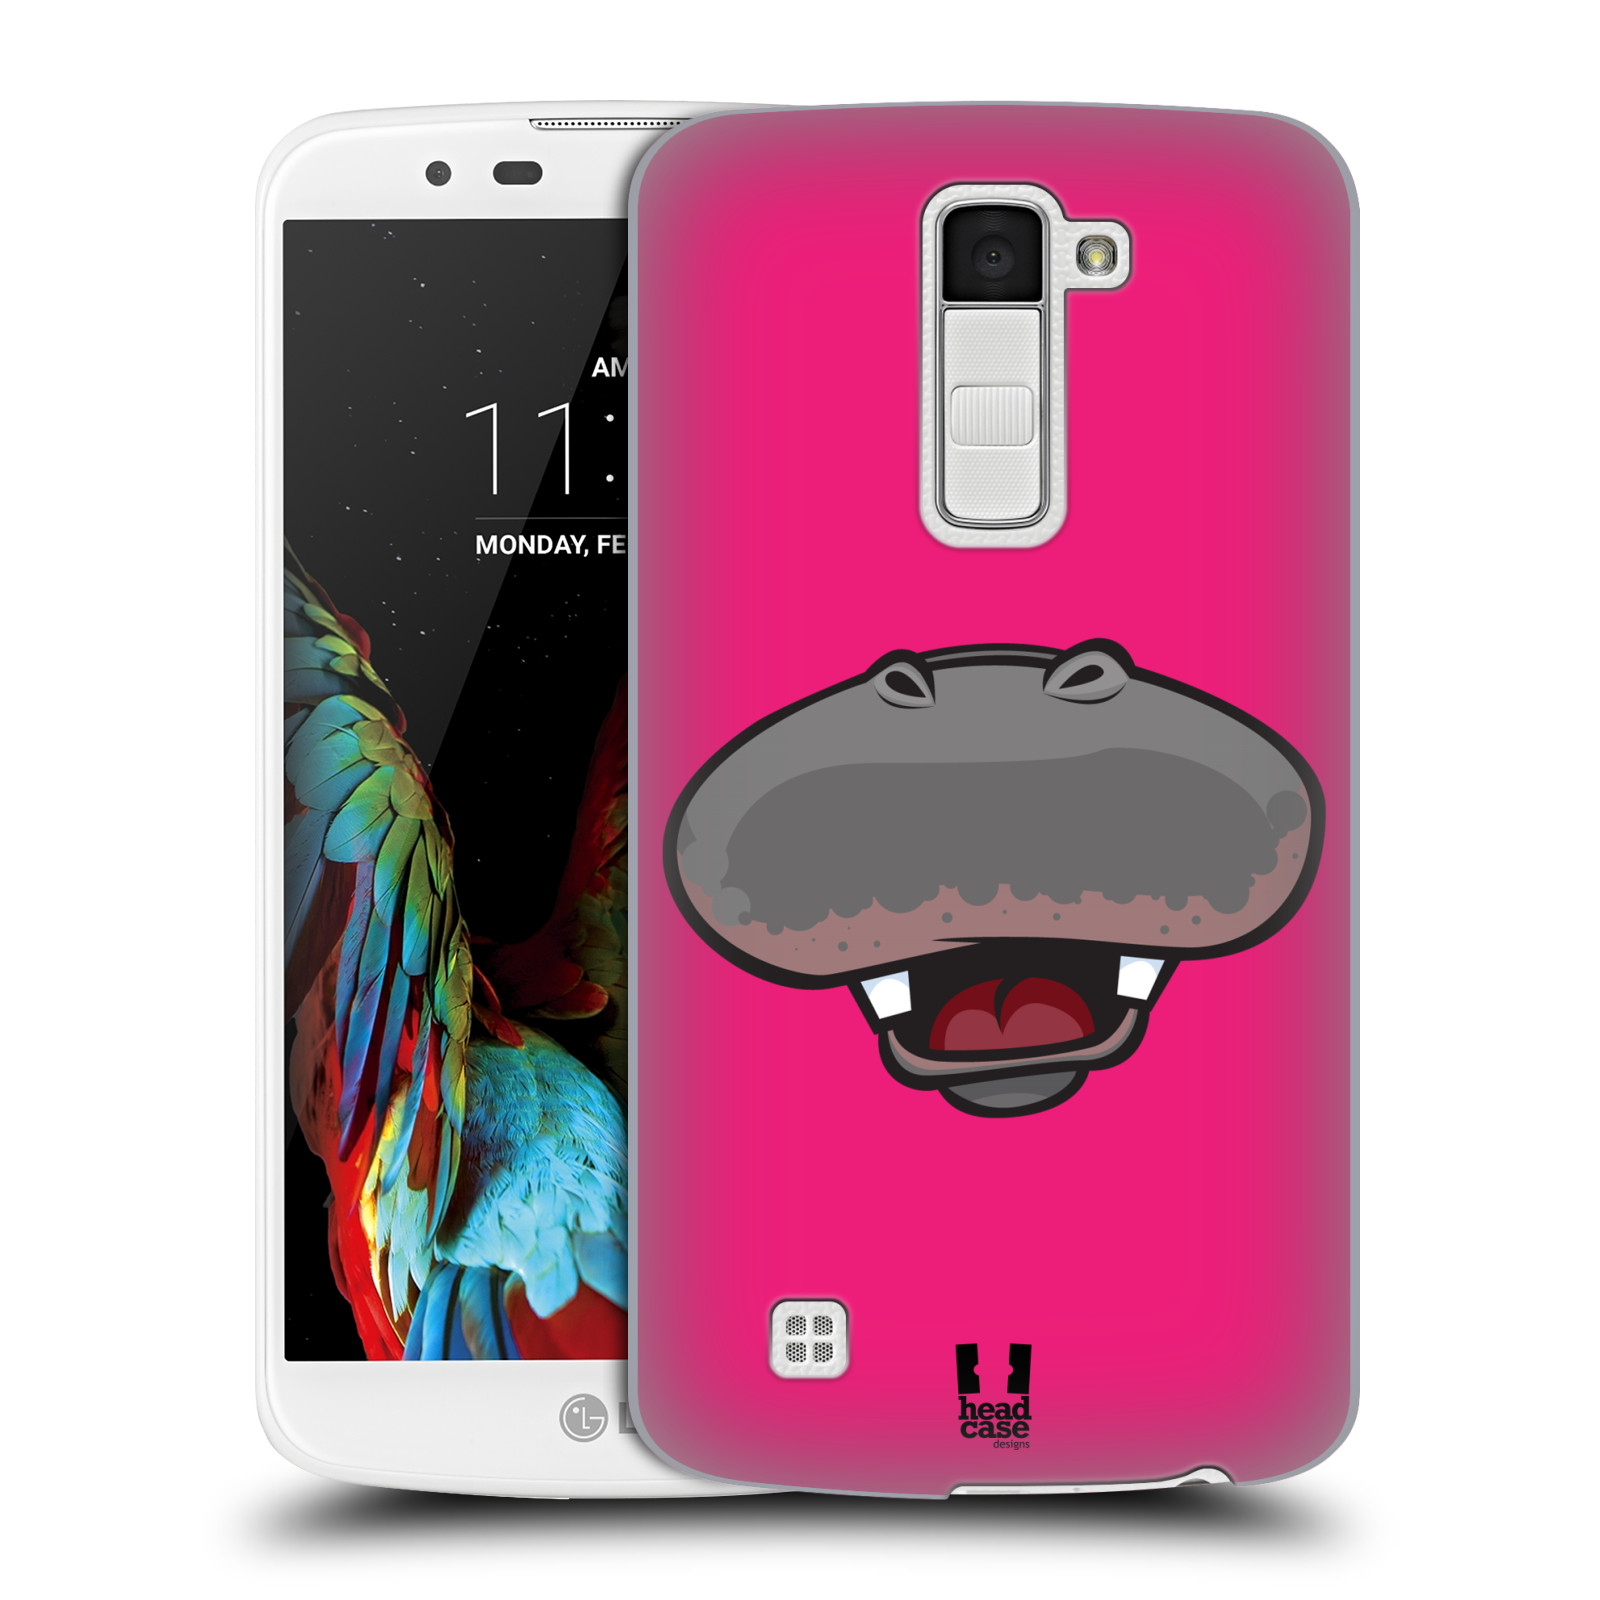 HEAD CASE plastový obal na mobil LG K10 vzor Zvířecí úsměv hroch růžová